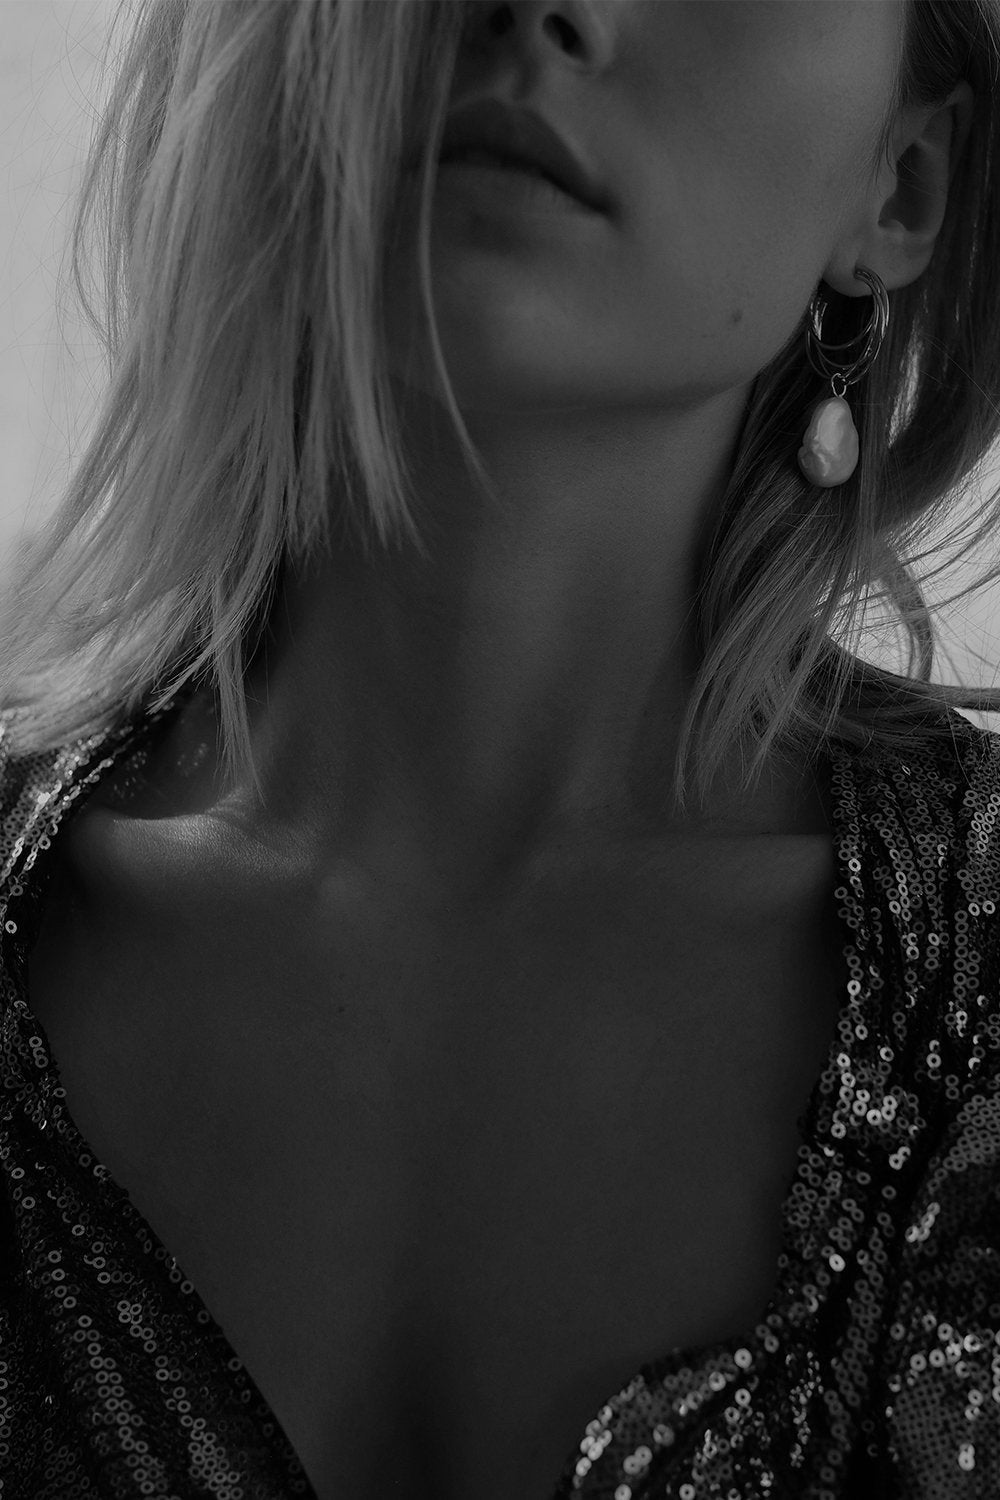 Lindsey Earrings with Keshi Pearls | Silver| Natasha Schweitzer